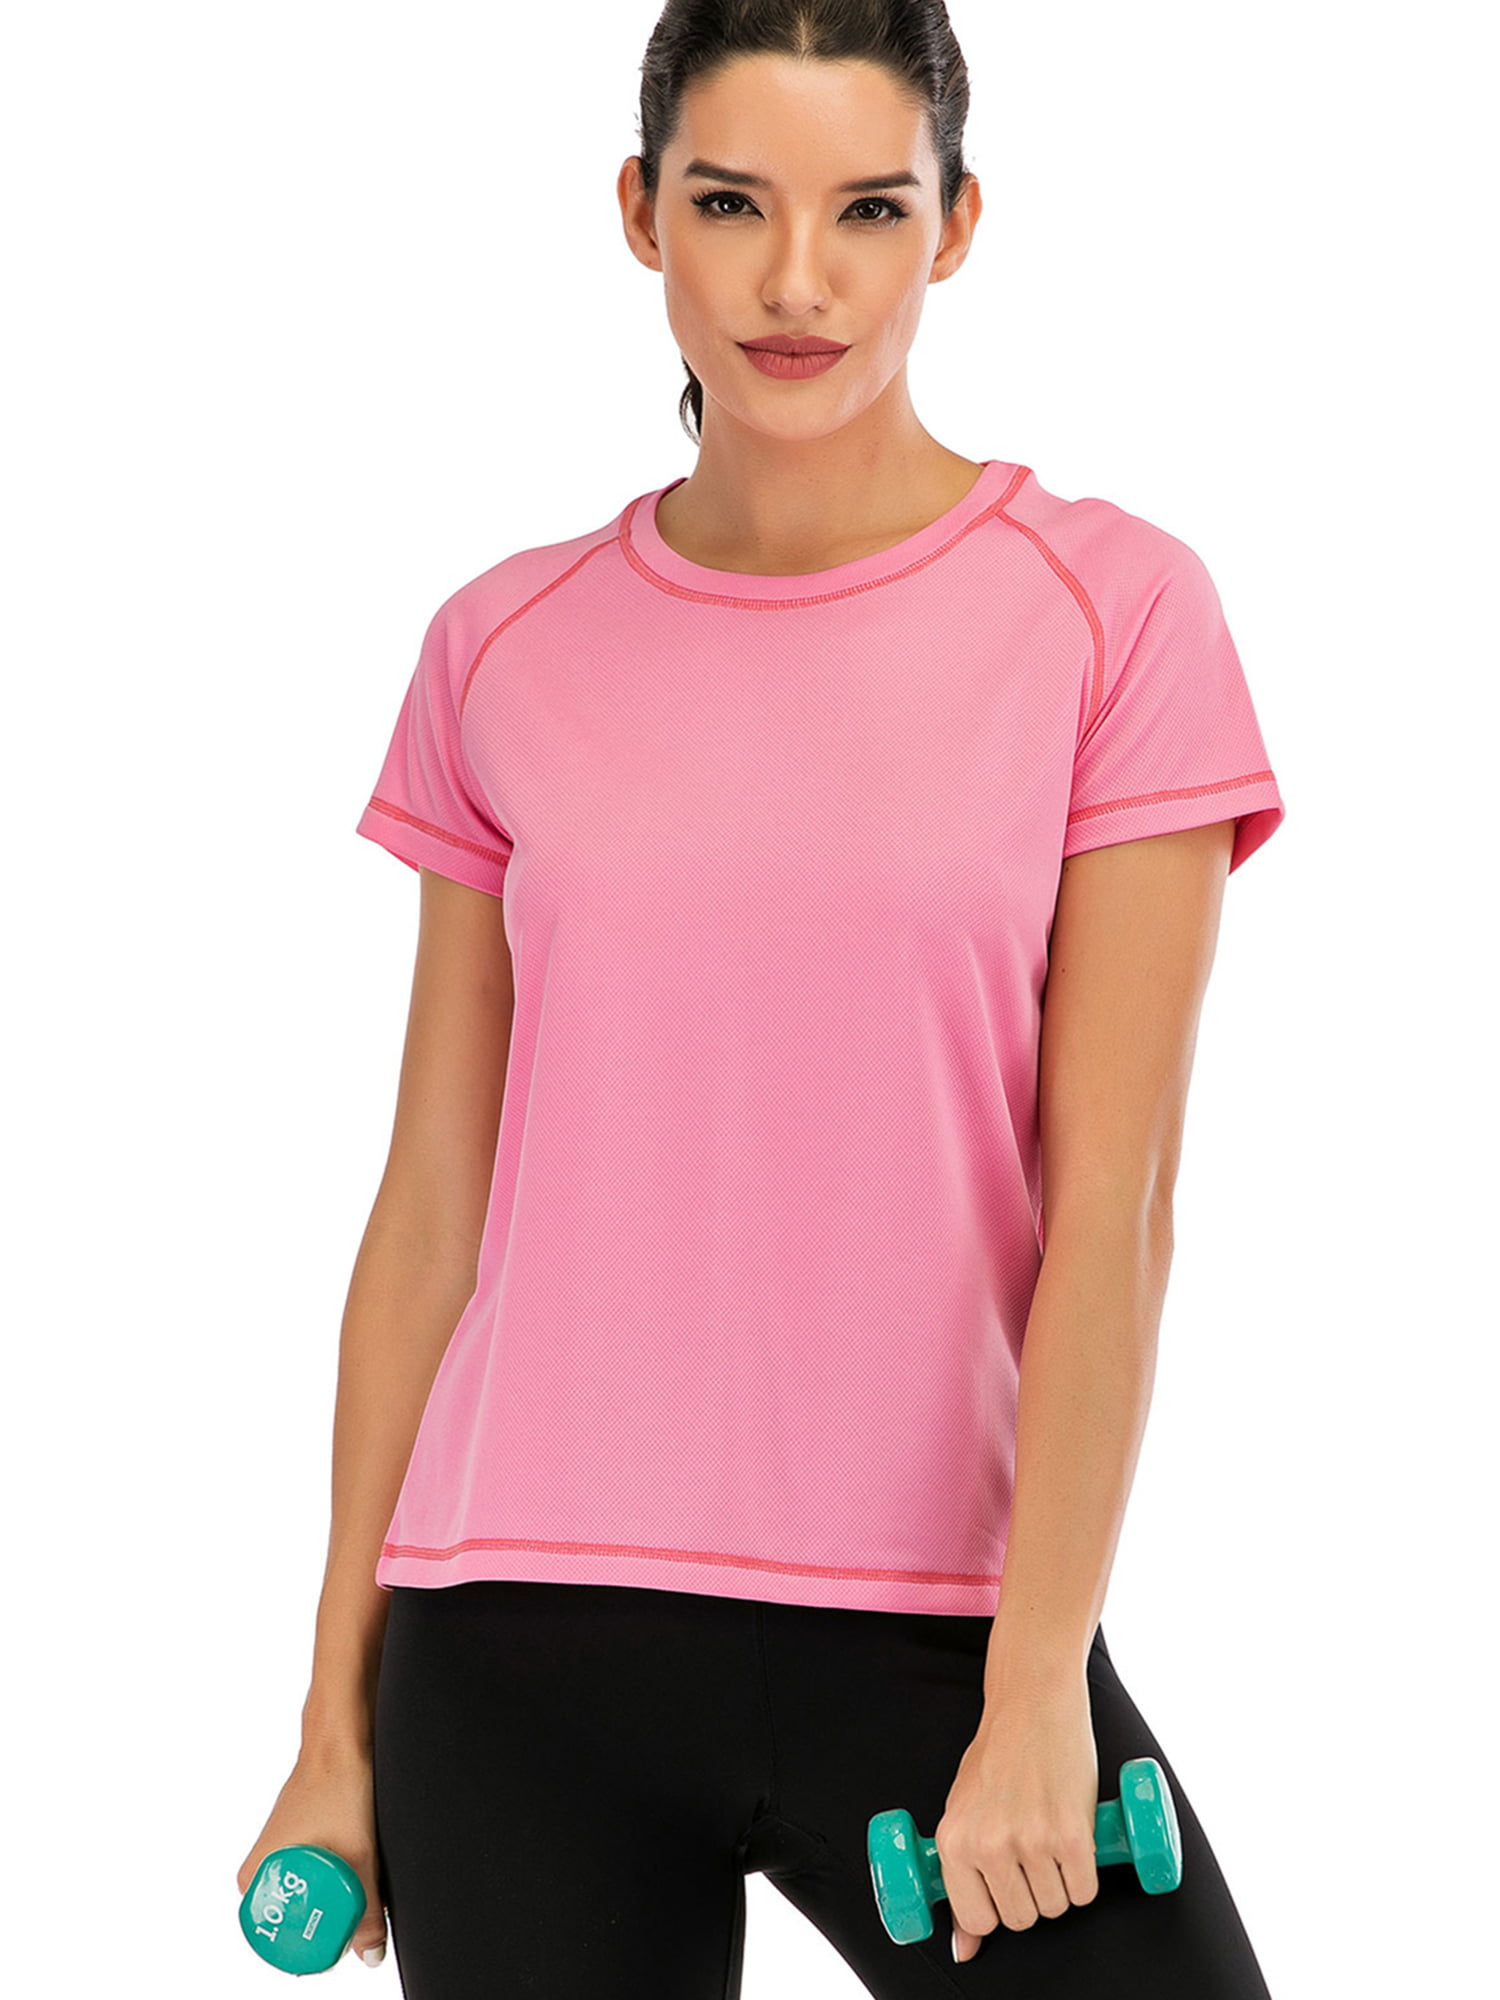 Nandashe Womens Short Sleeve Yoga Tops Dry Fit Activewear Running Workout Shirt 